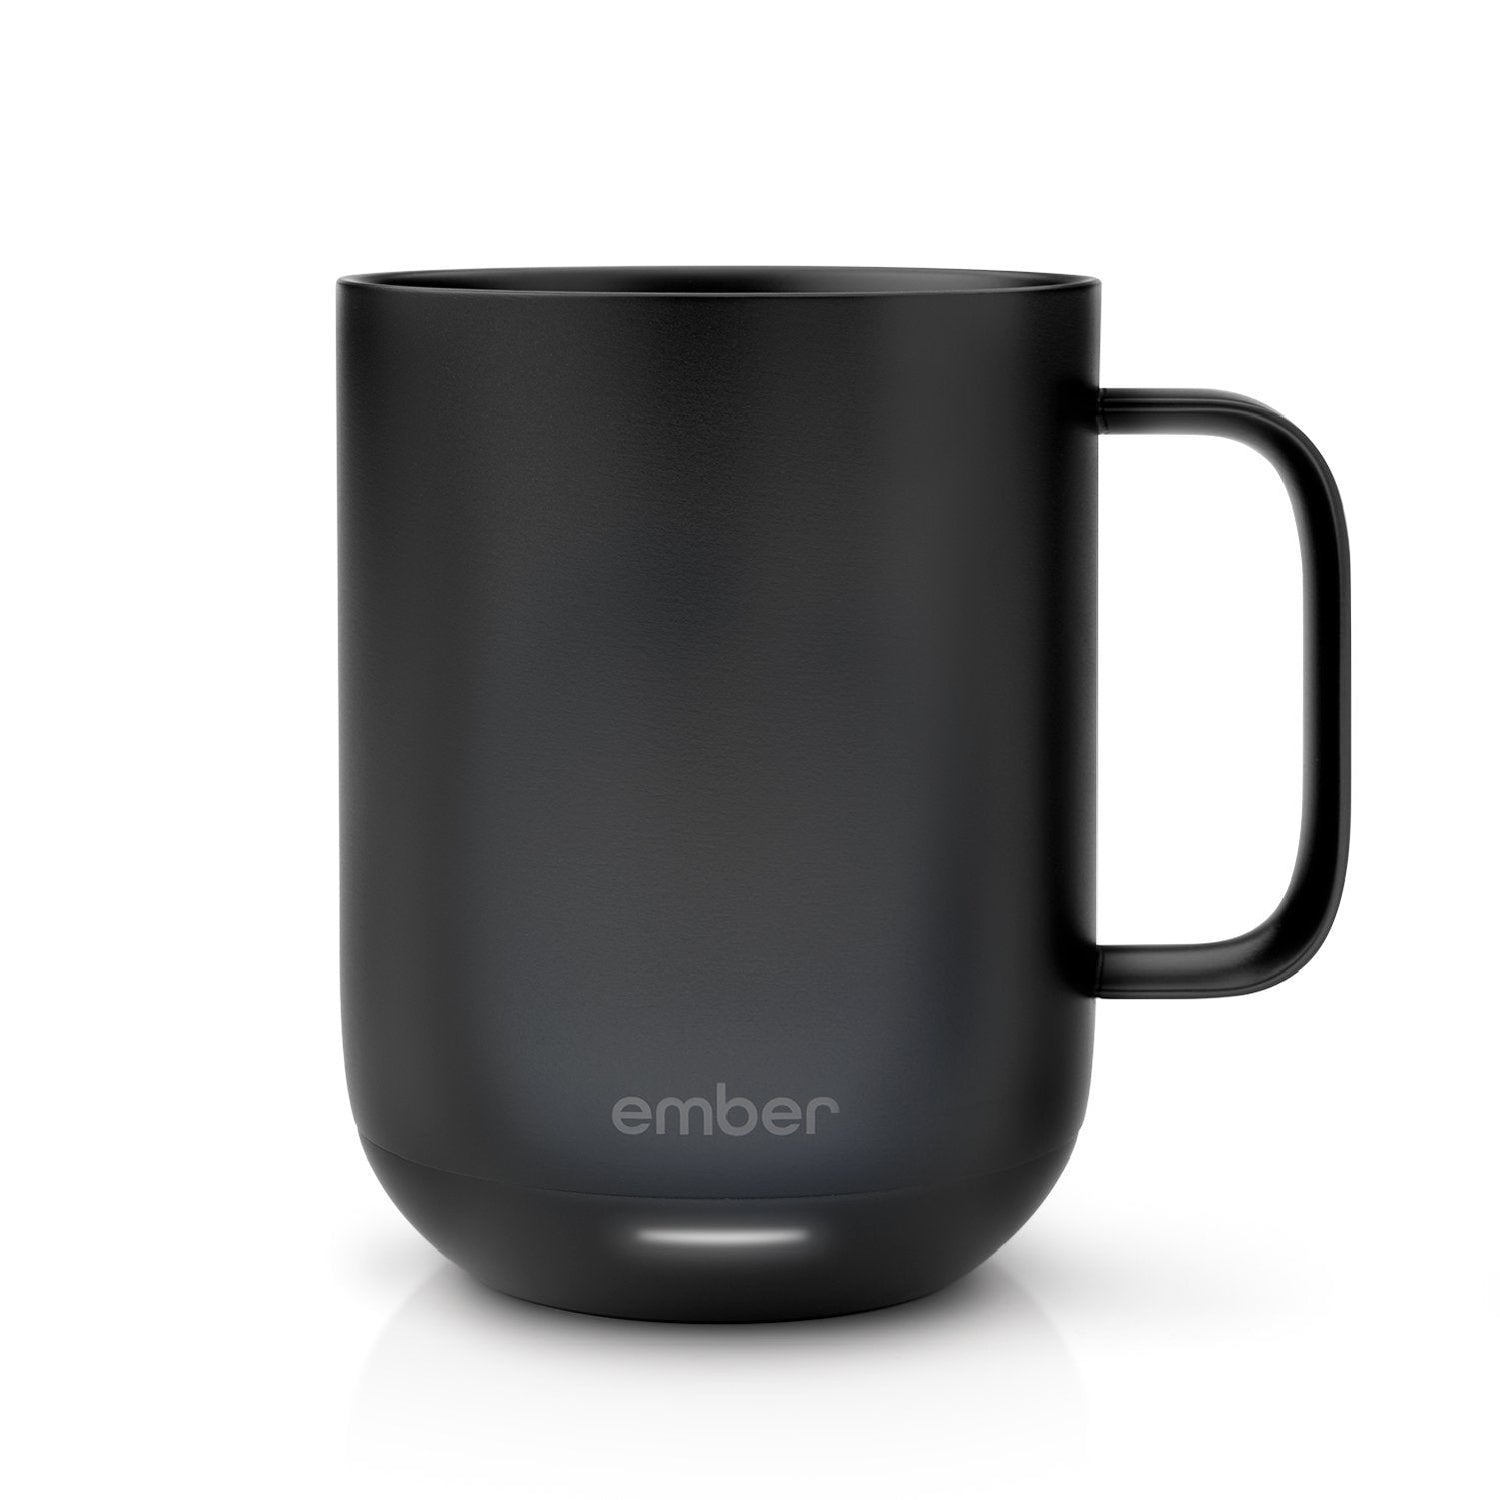 Ember Mug 2 Temperature Control Smart Mug - Gray